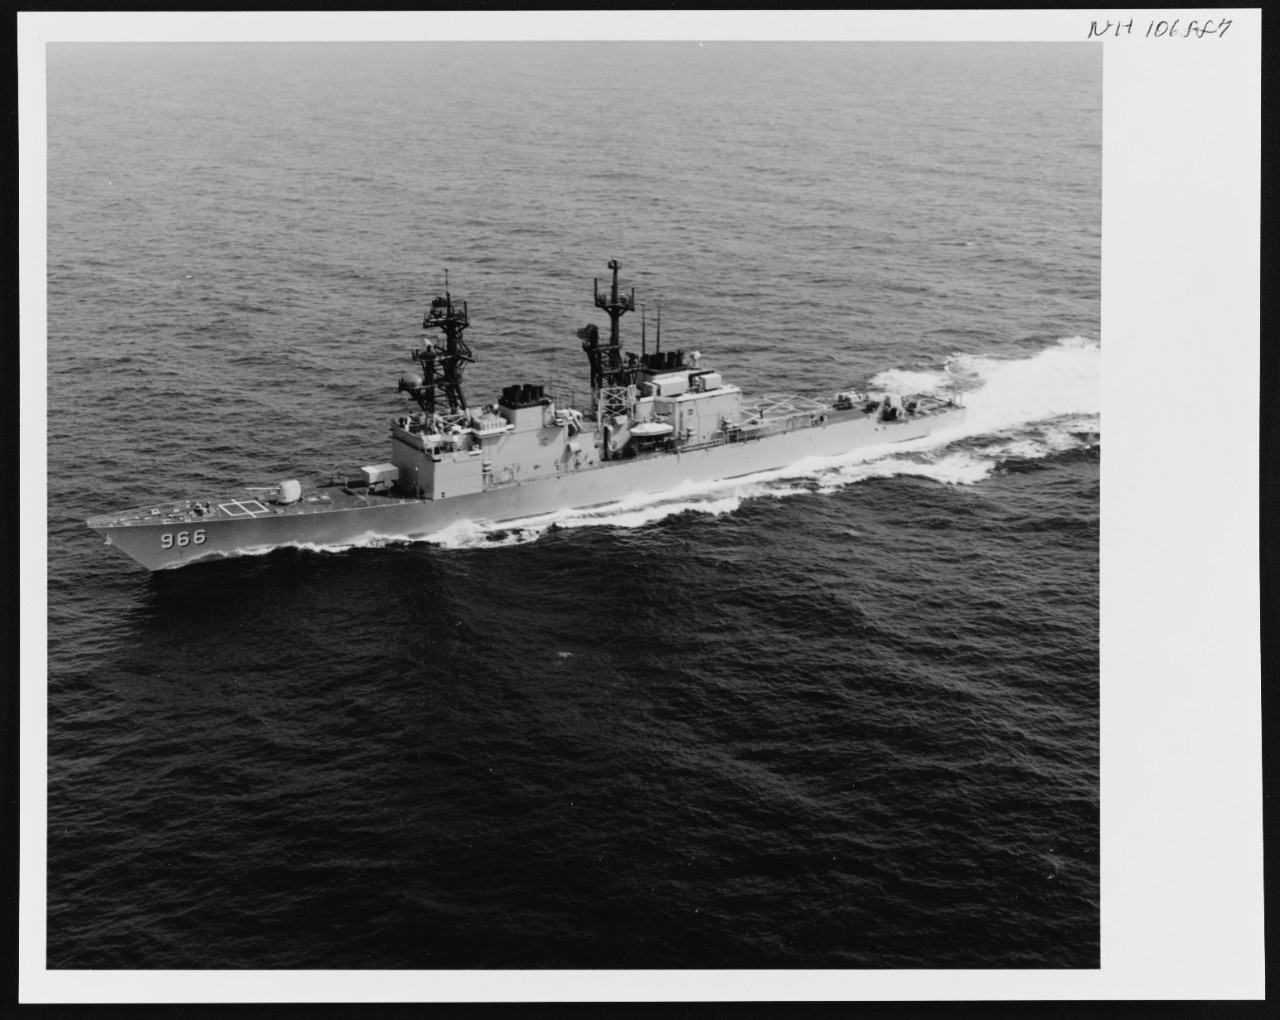 Photo # NH 106887  USS Hewitt